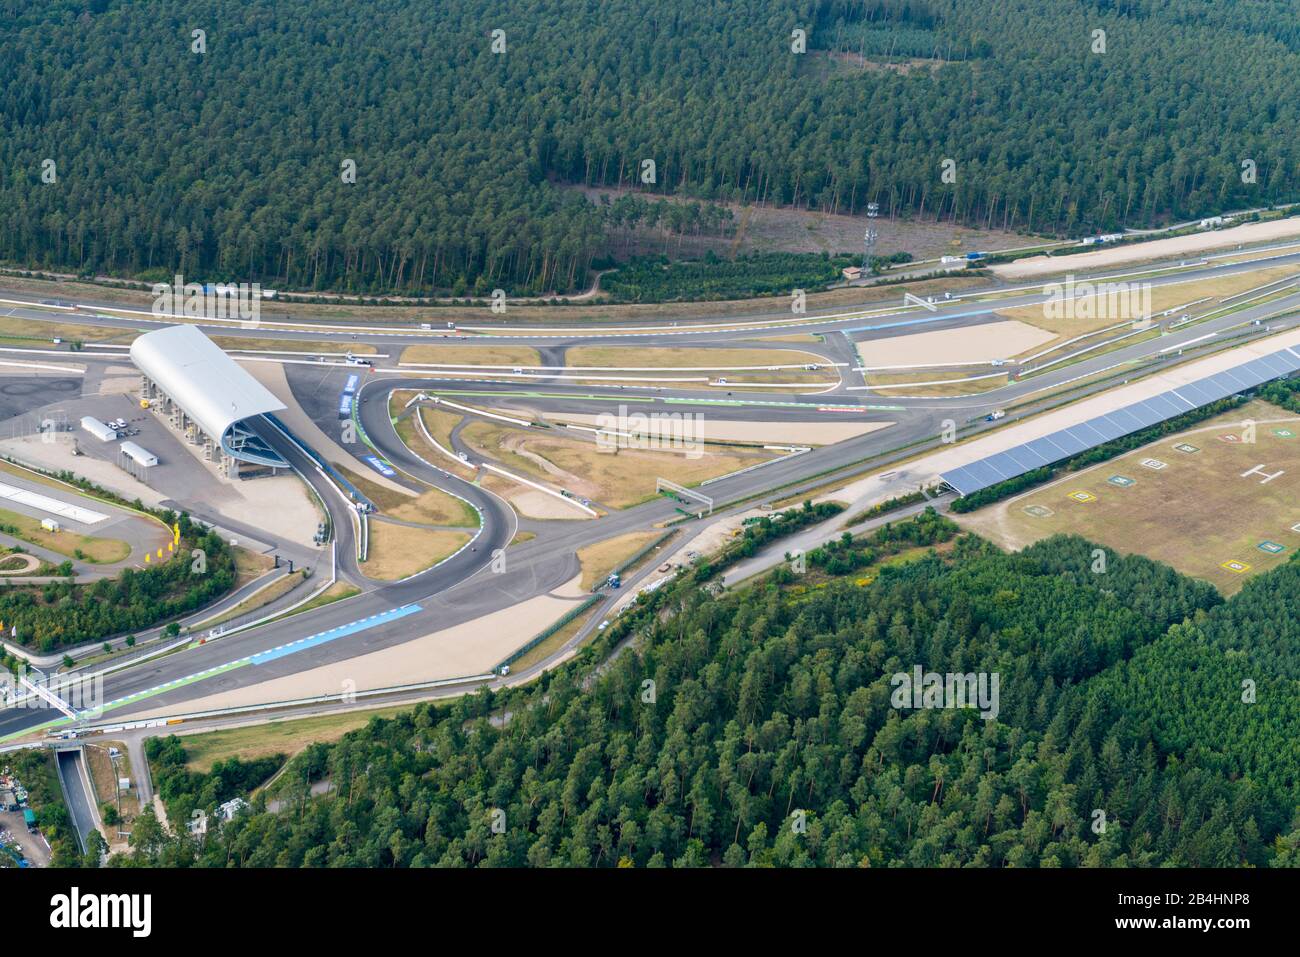 Vista aérea de la pista de carreras de Hockenheimring Foto de stock